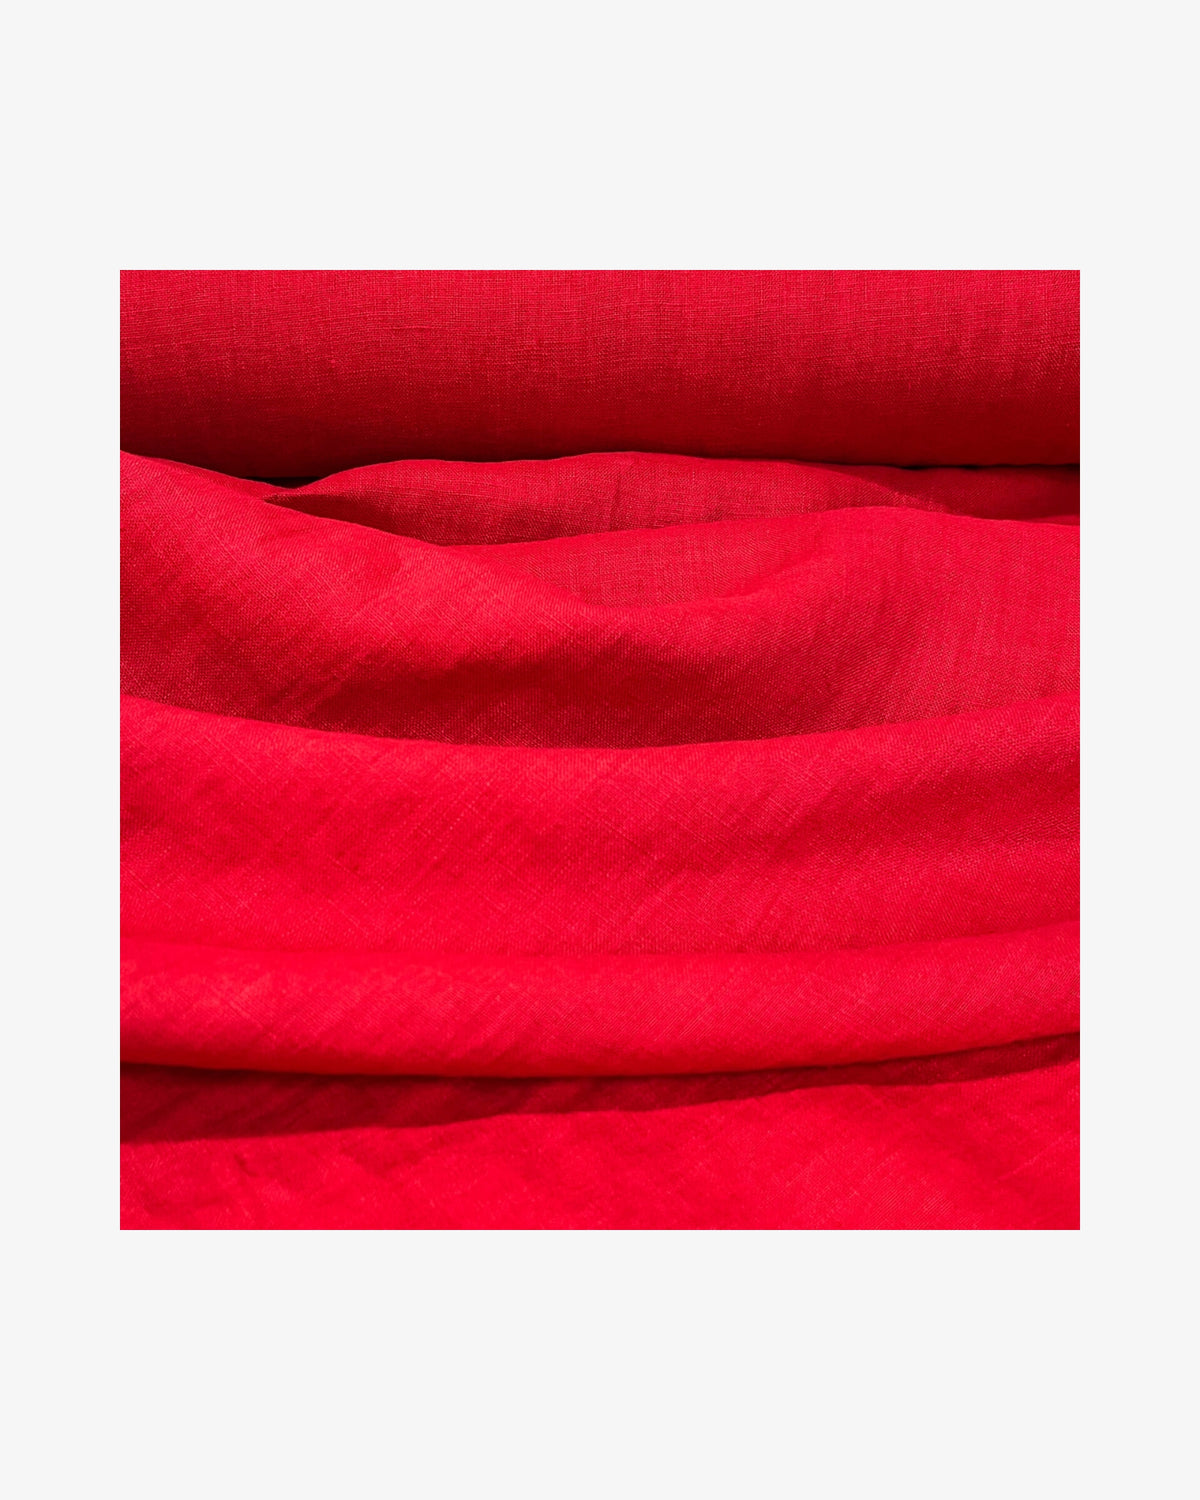 Vivid Red Linen by Merchant &amp; Mills